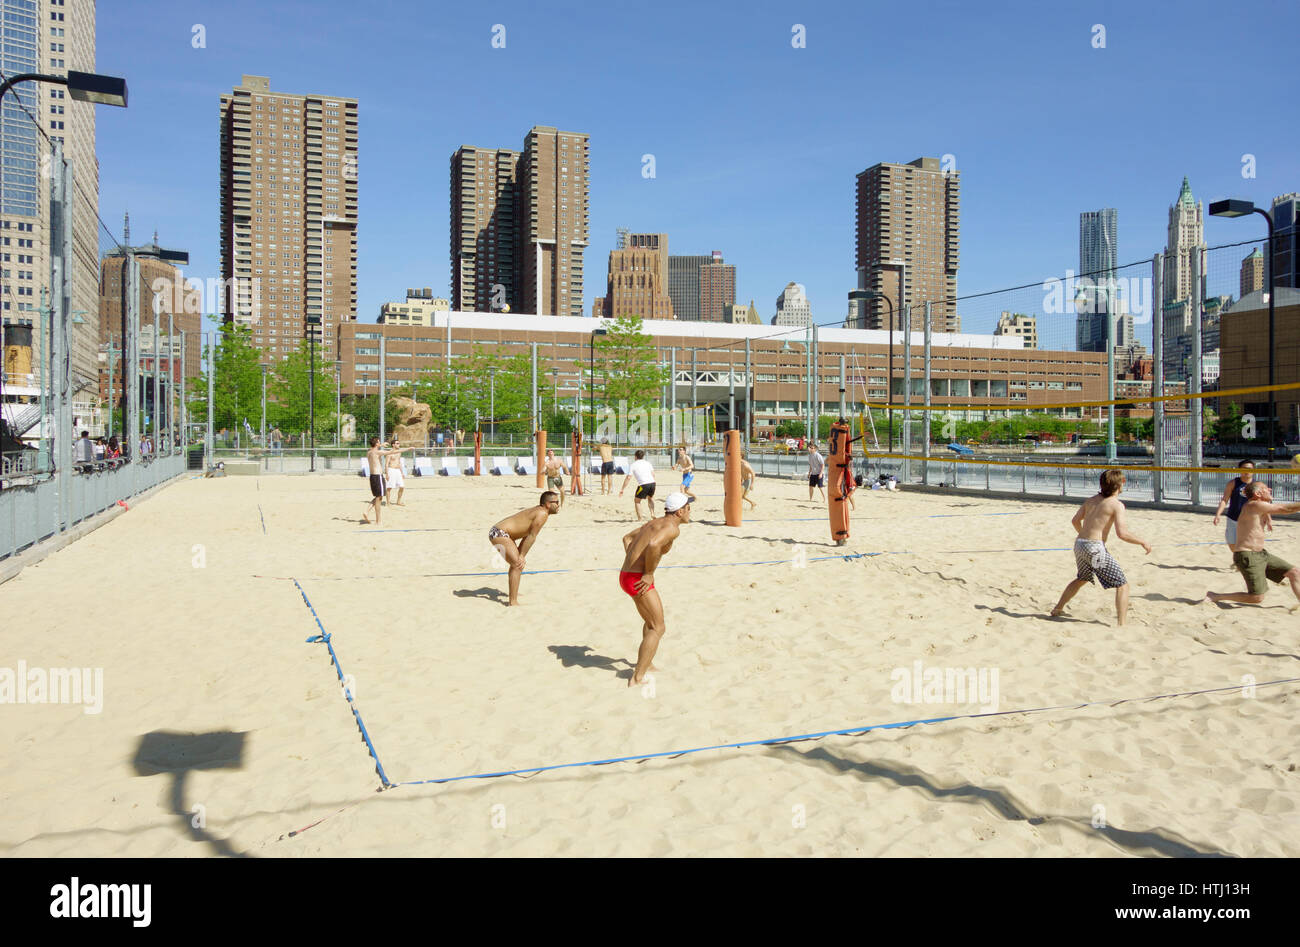 Men playing beach volleyball, Pier 25, Hudson River Park, Tribeca, NYC, USA Stock Photo